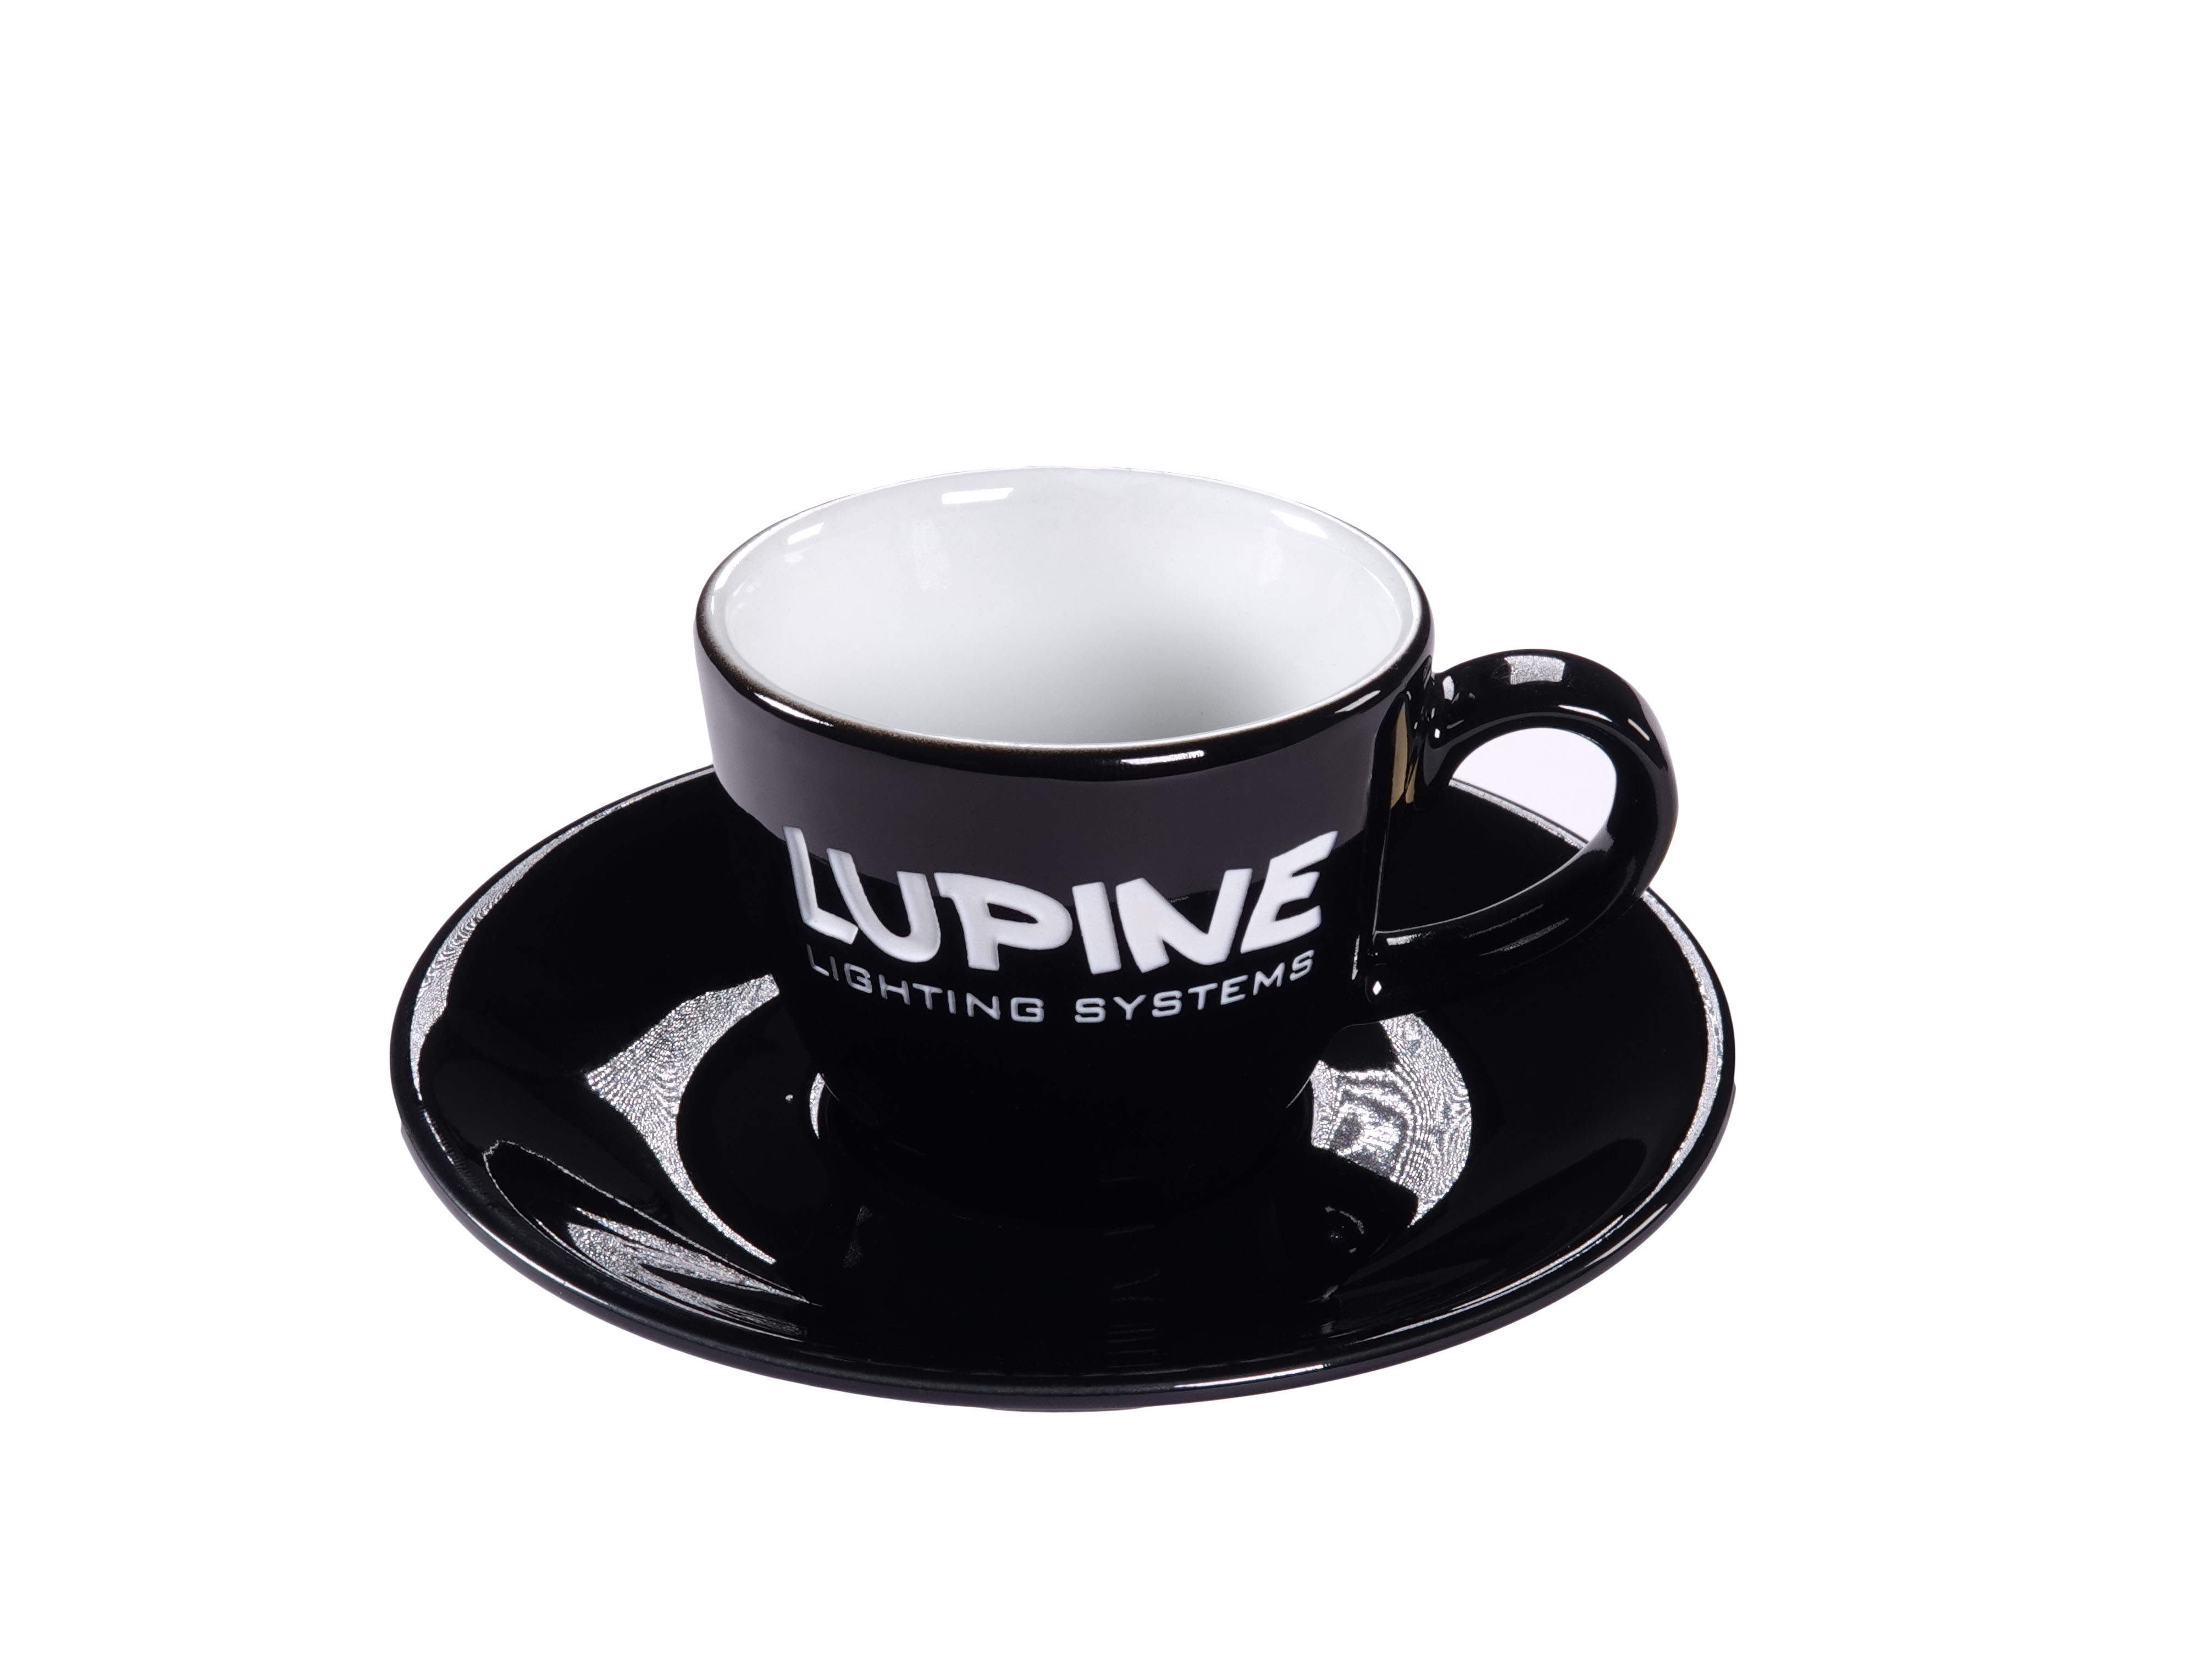 Lupine espresso cup